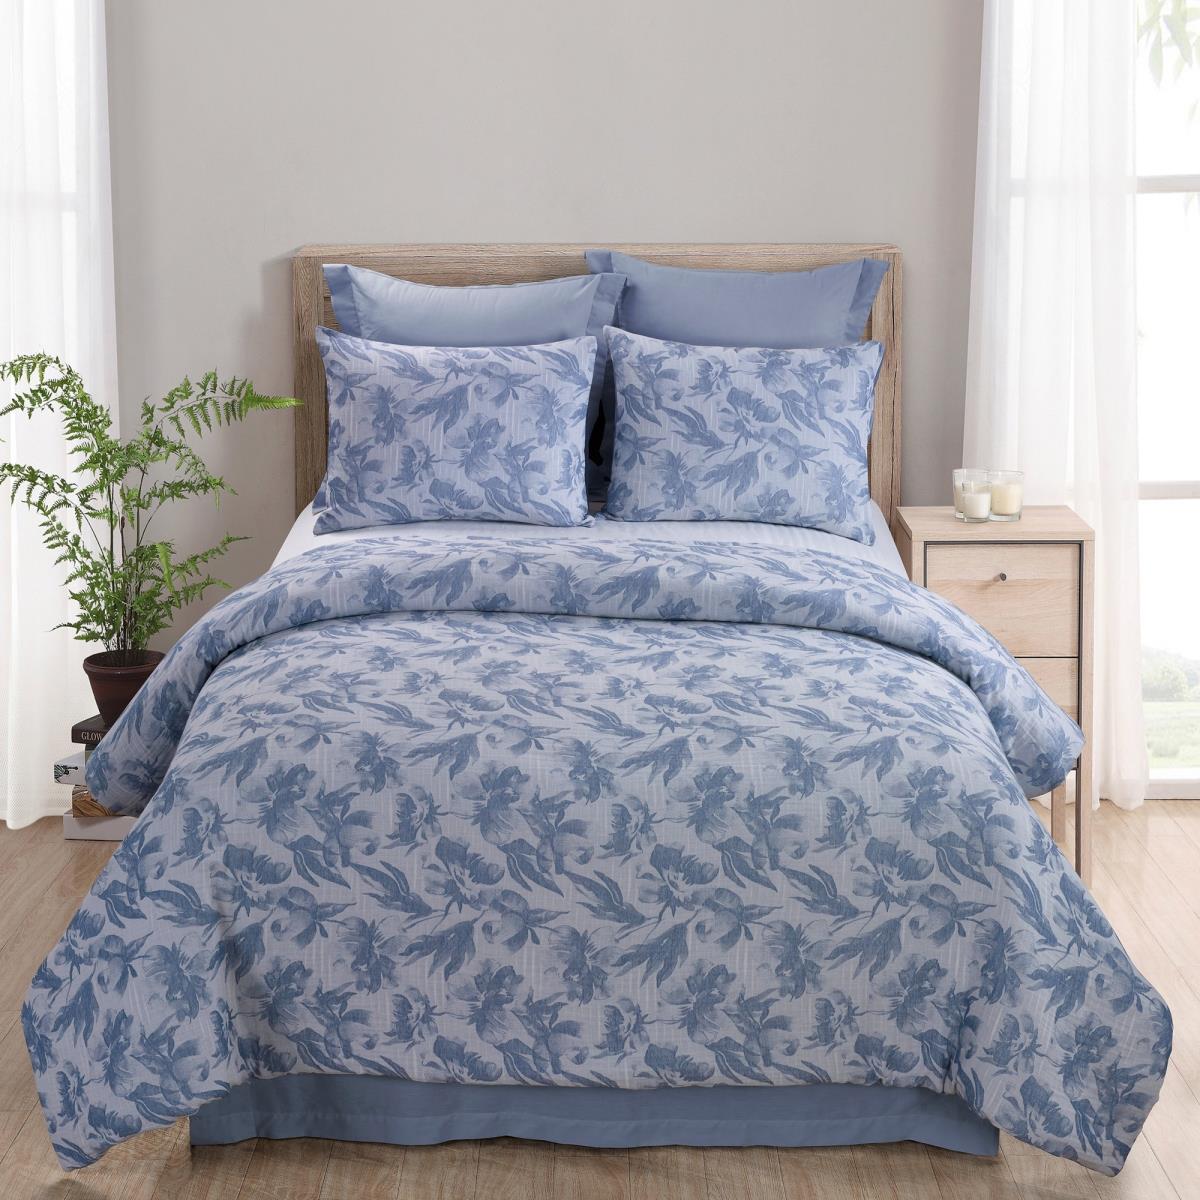 Y00430 Queen Size Comforter Set - Almaria Soft Blue